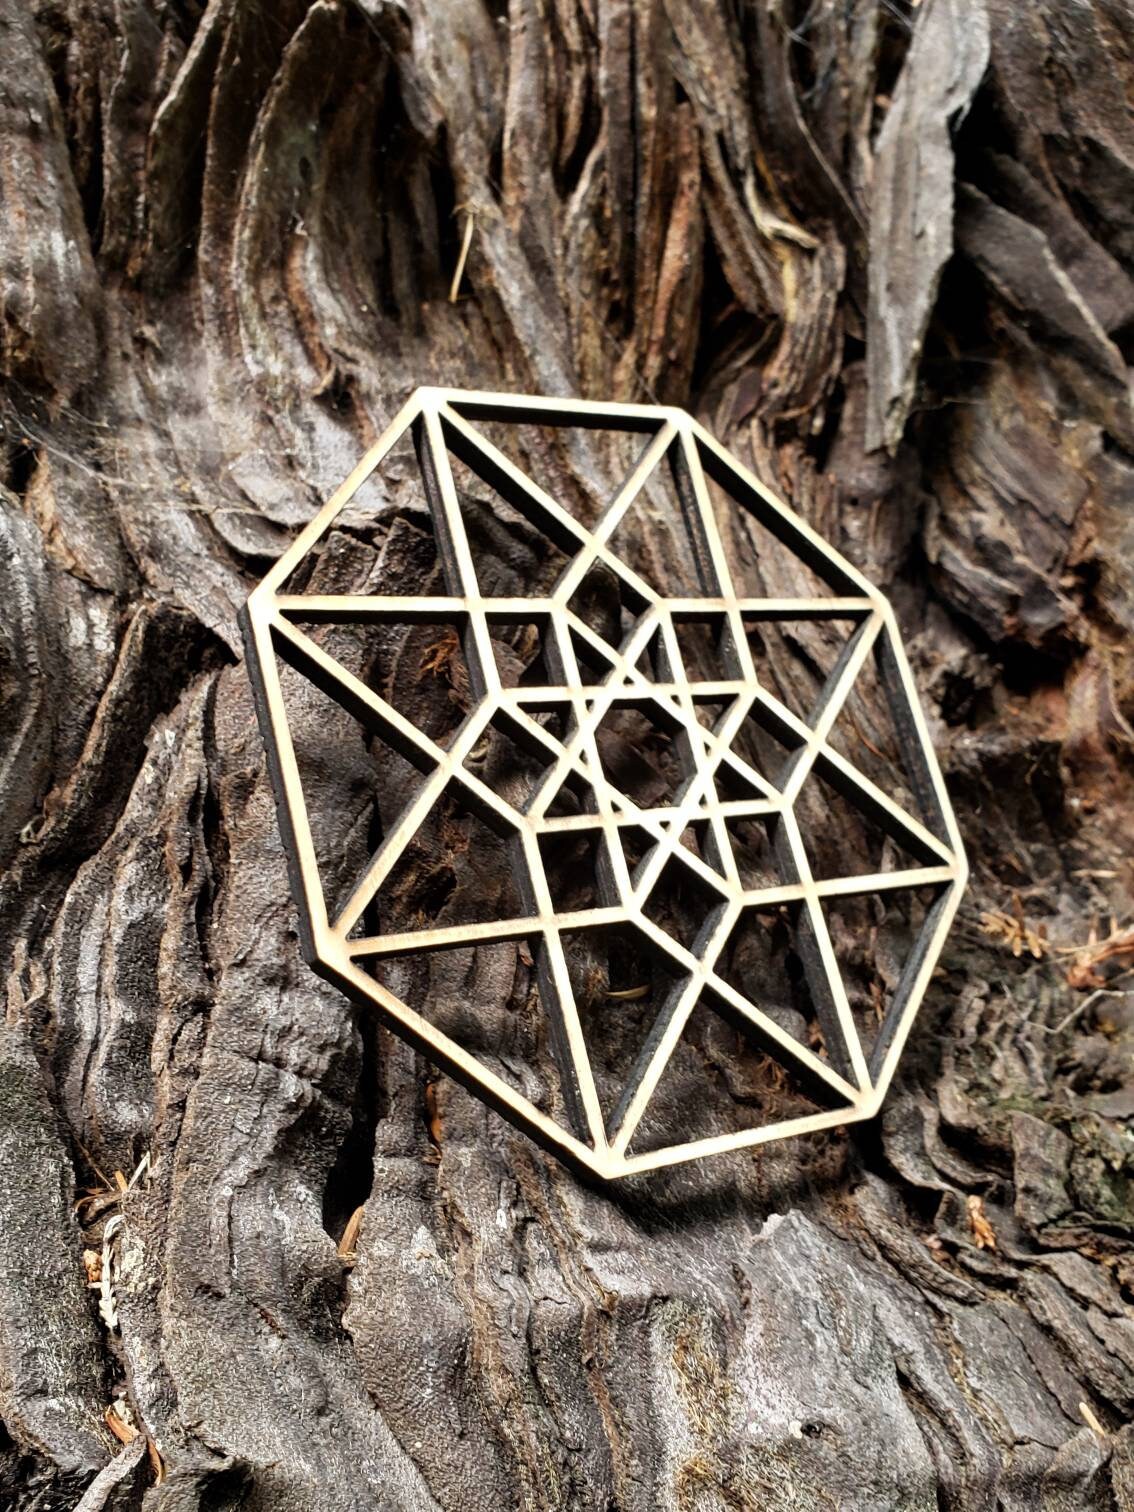 Hypercube Tesseract Wall Art or Crystal Grid in Lasercut Reclaimed Wood - Sacred Geometry - Hyperdimensional Cube